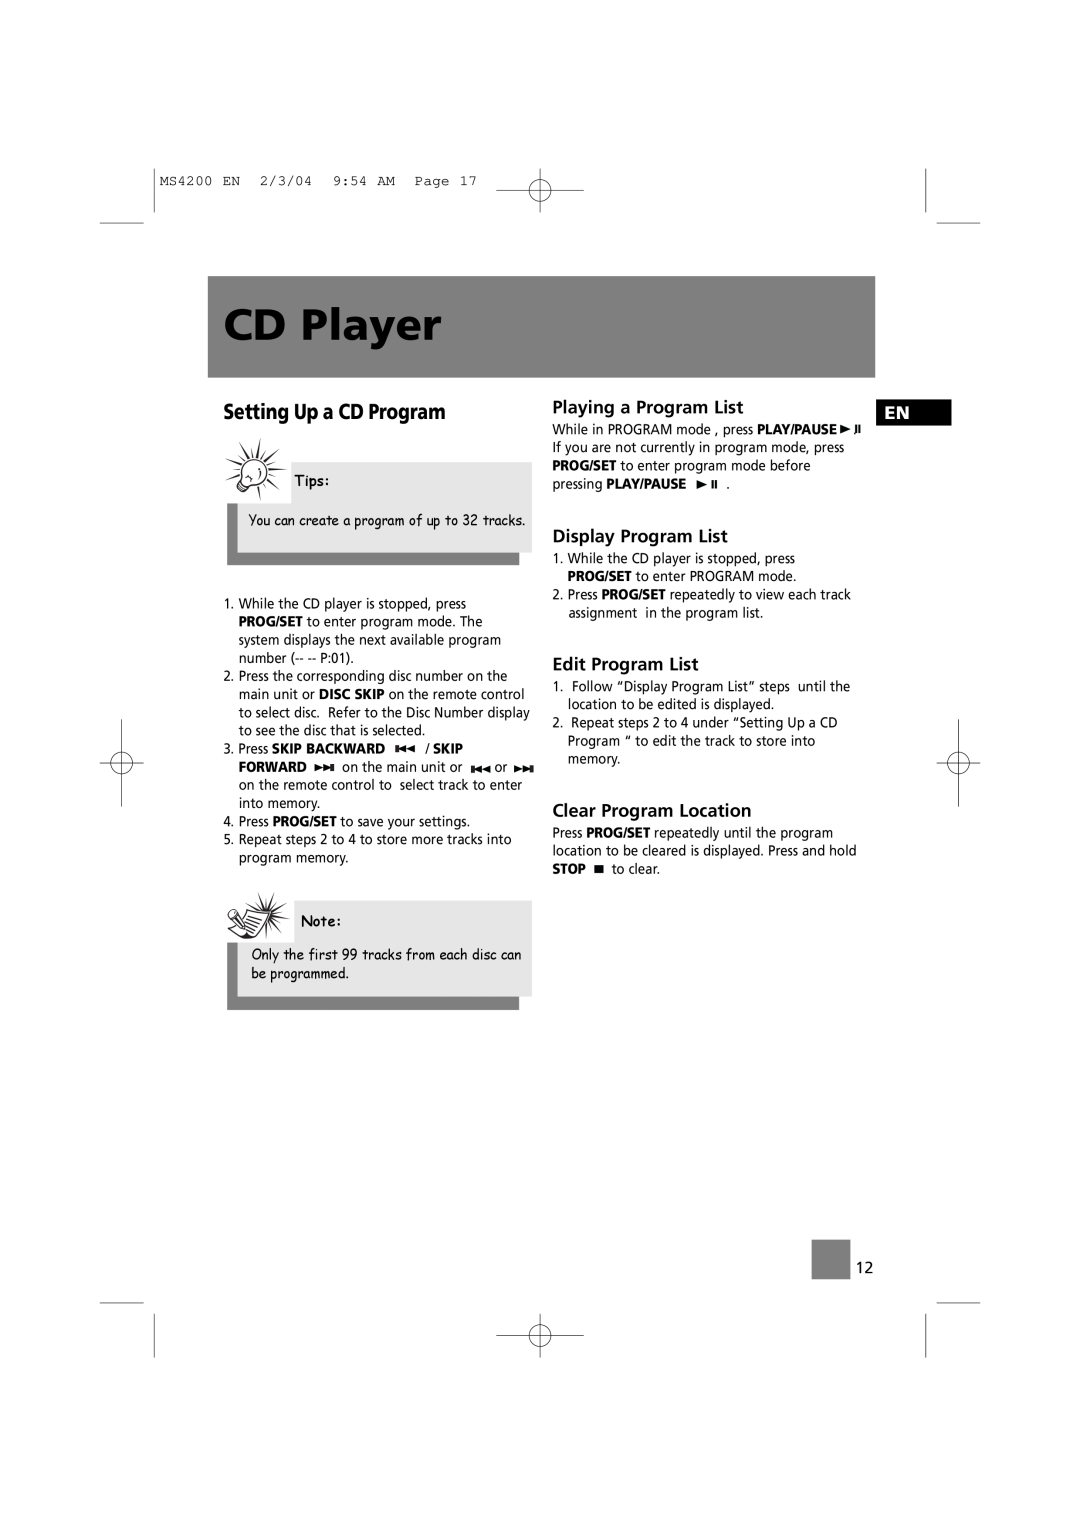 Technicolor - Thomson MS4200 manual Setting Up a CD Program, CD Player, Playing a Program List, Display Program List, Tips 